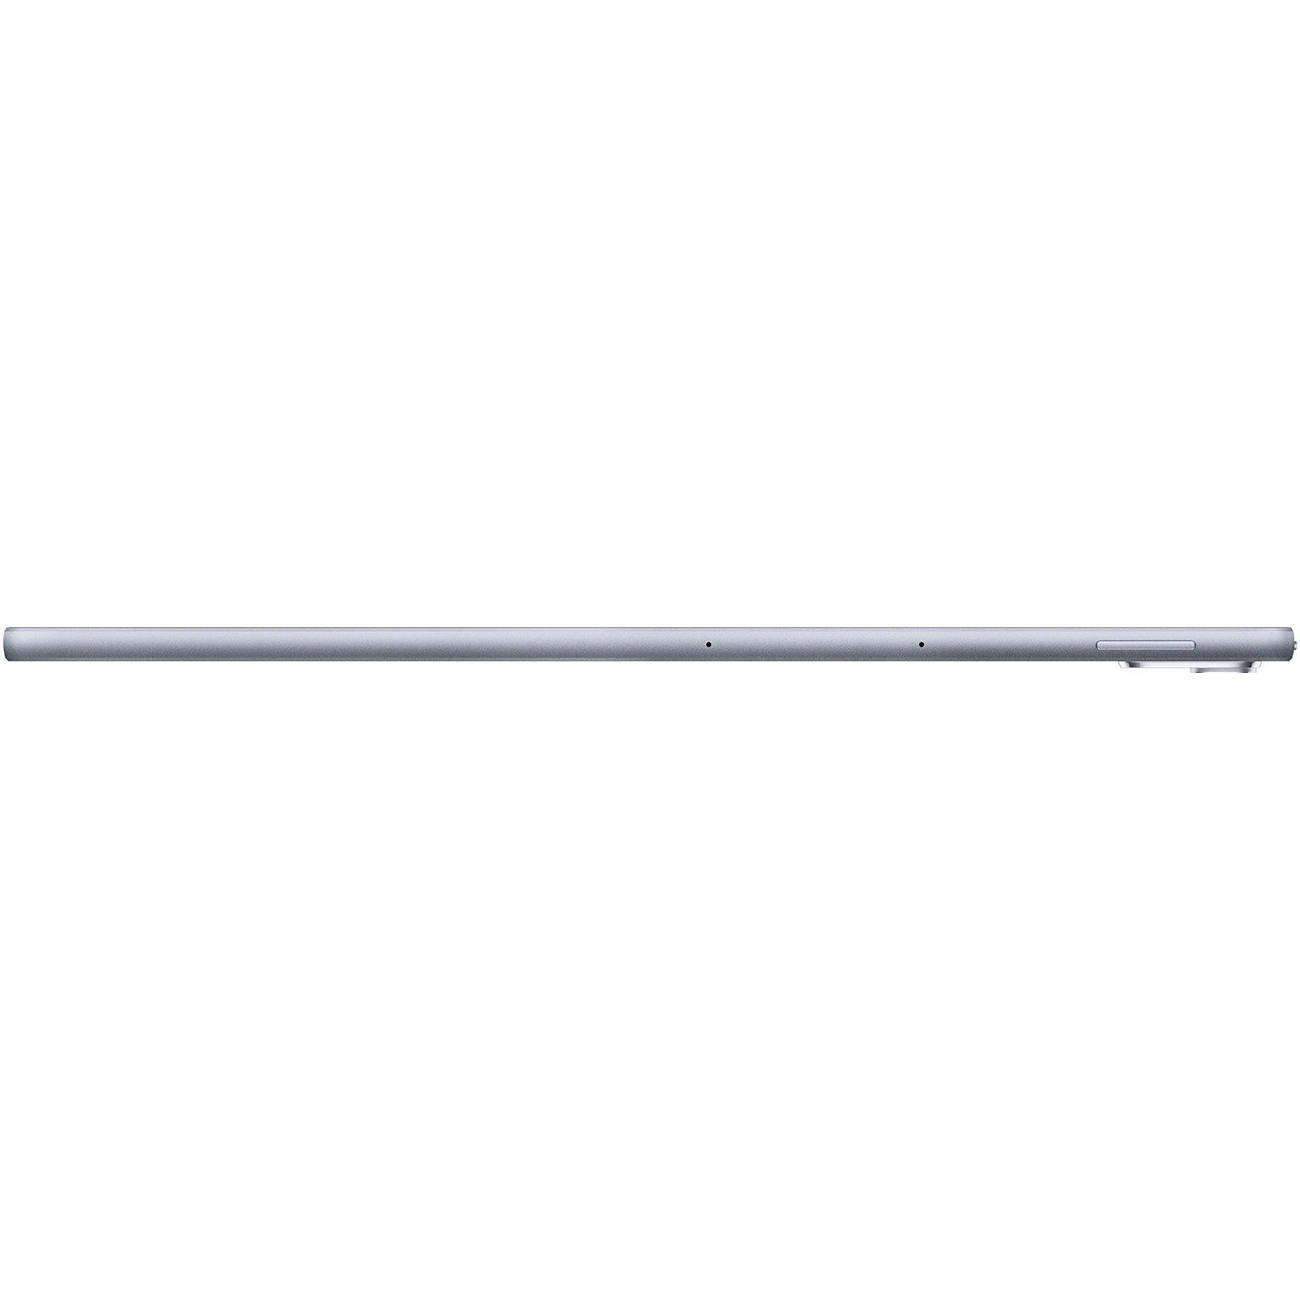 Huawei MatePad 11.5, 2023, 6/128ГБ Wi-Fi (Gray / Серый)